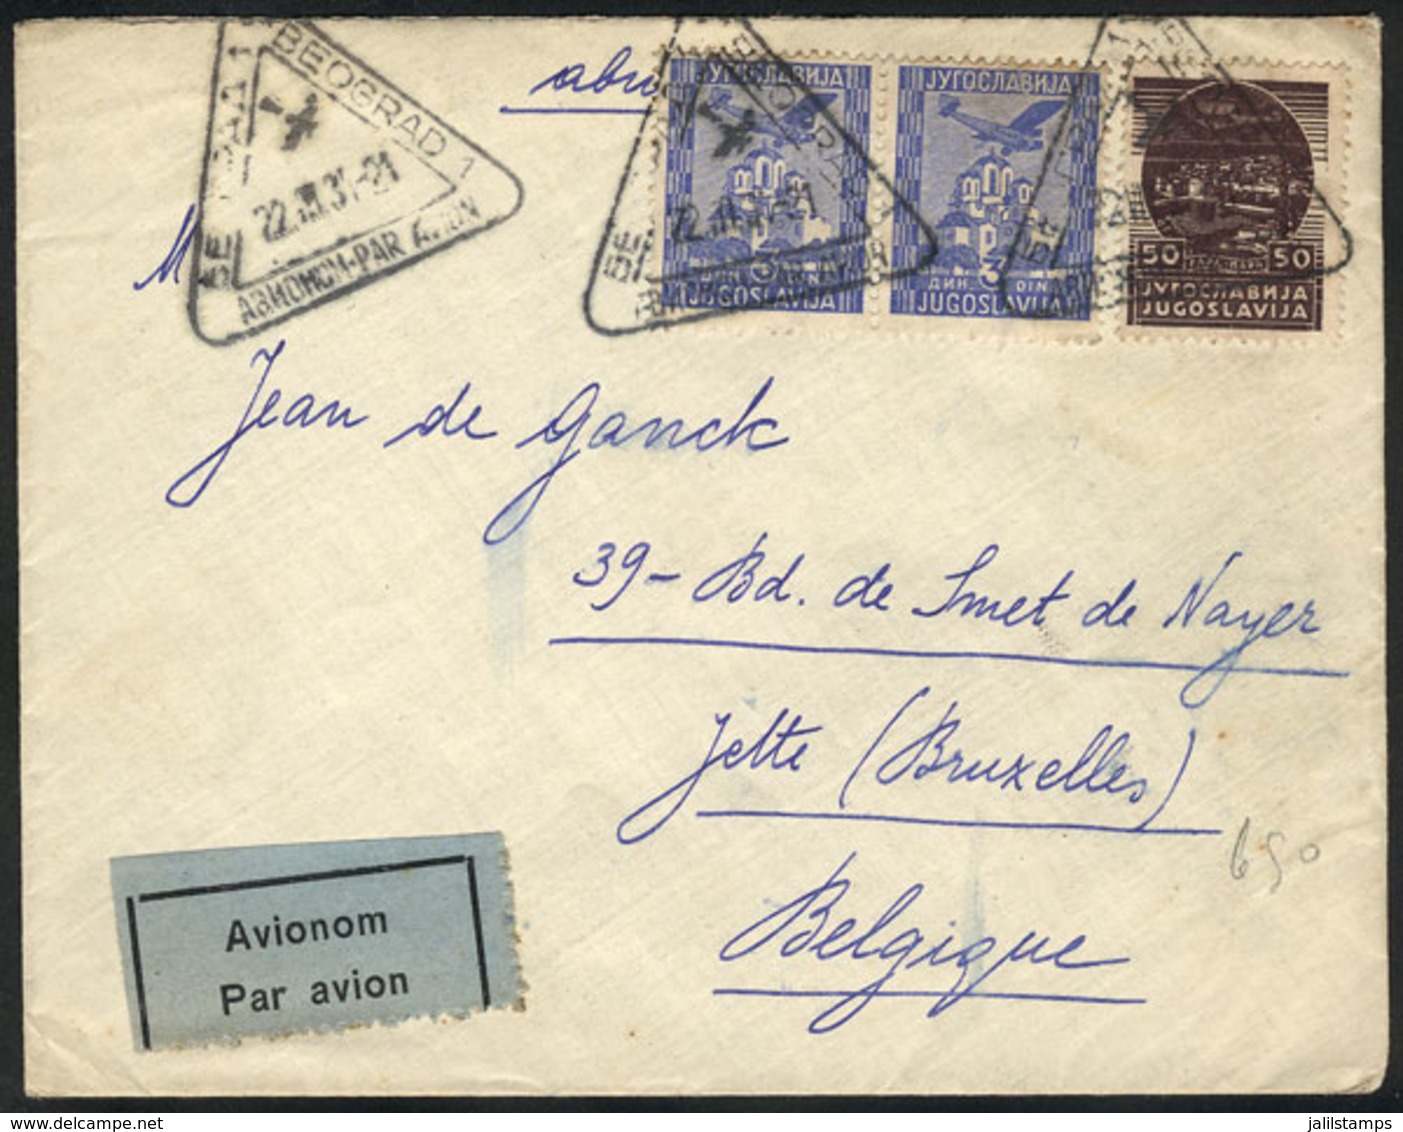 YUGOSLAVIA: 22/AU/1934 BEOGRAD - ZEMUN: Airmail Cover To Belgium, Very Fine Quality! - Lettres & Documents